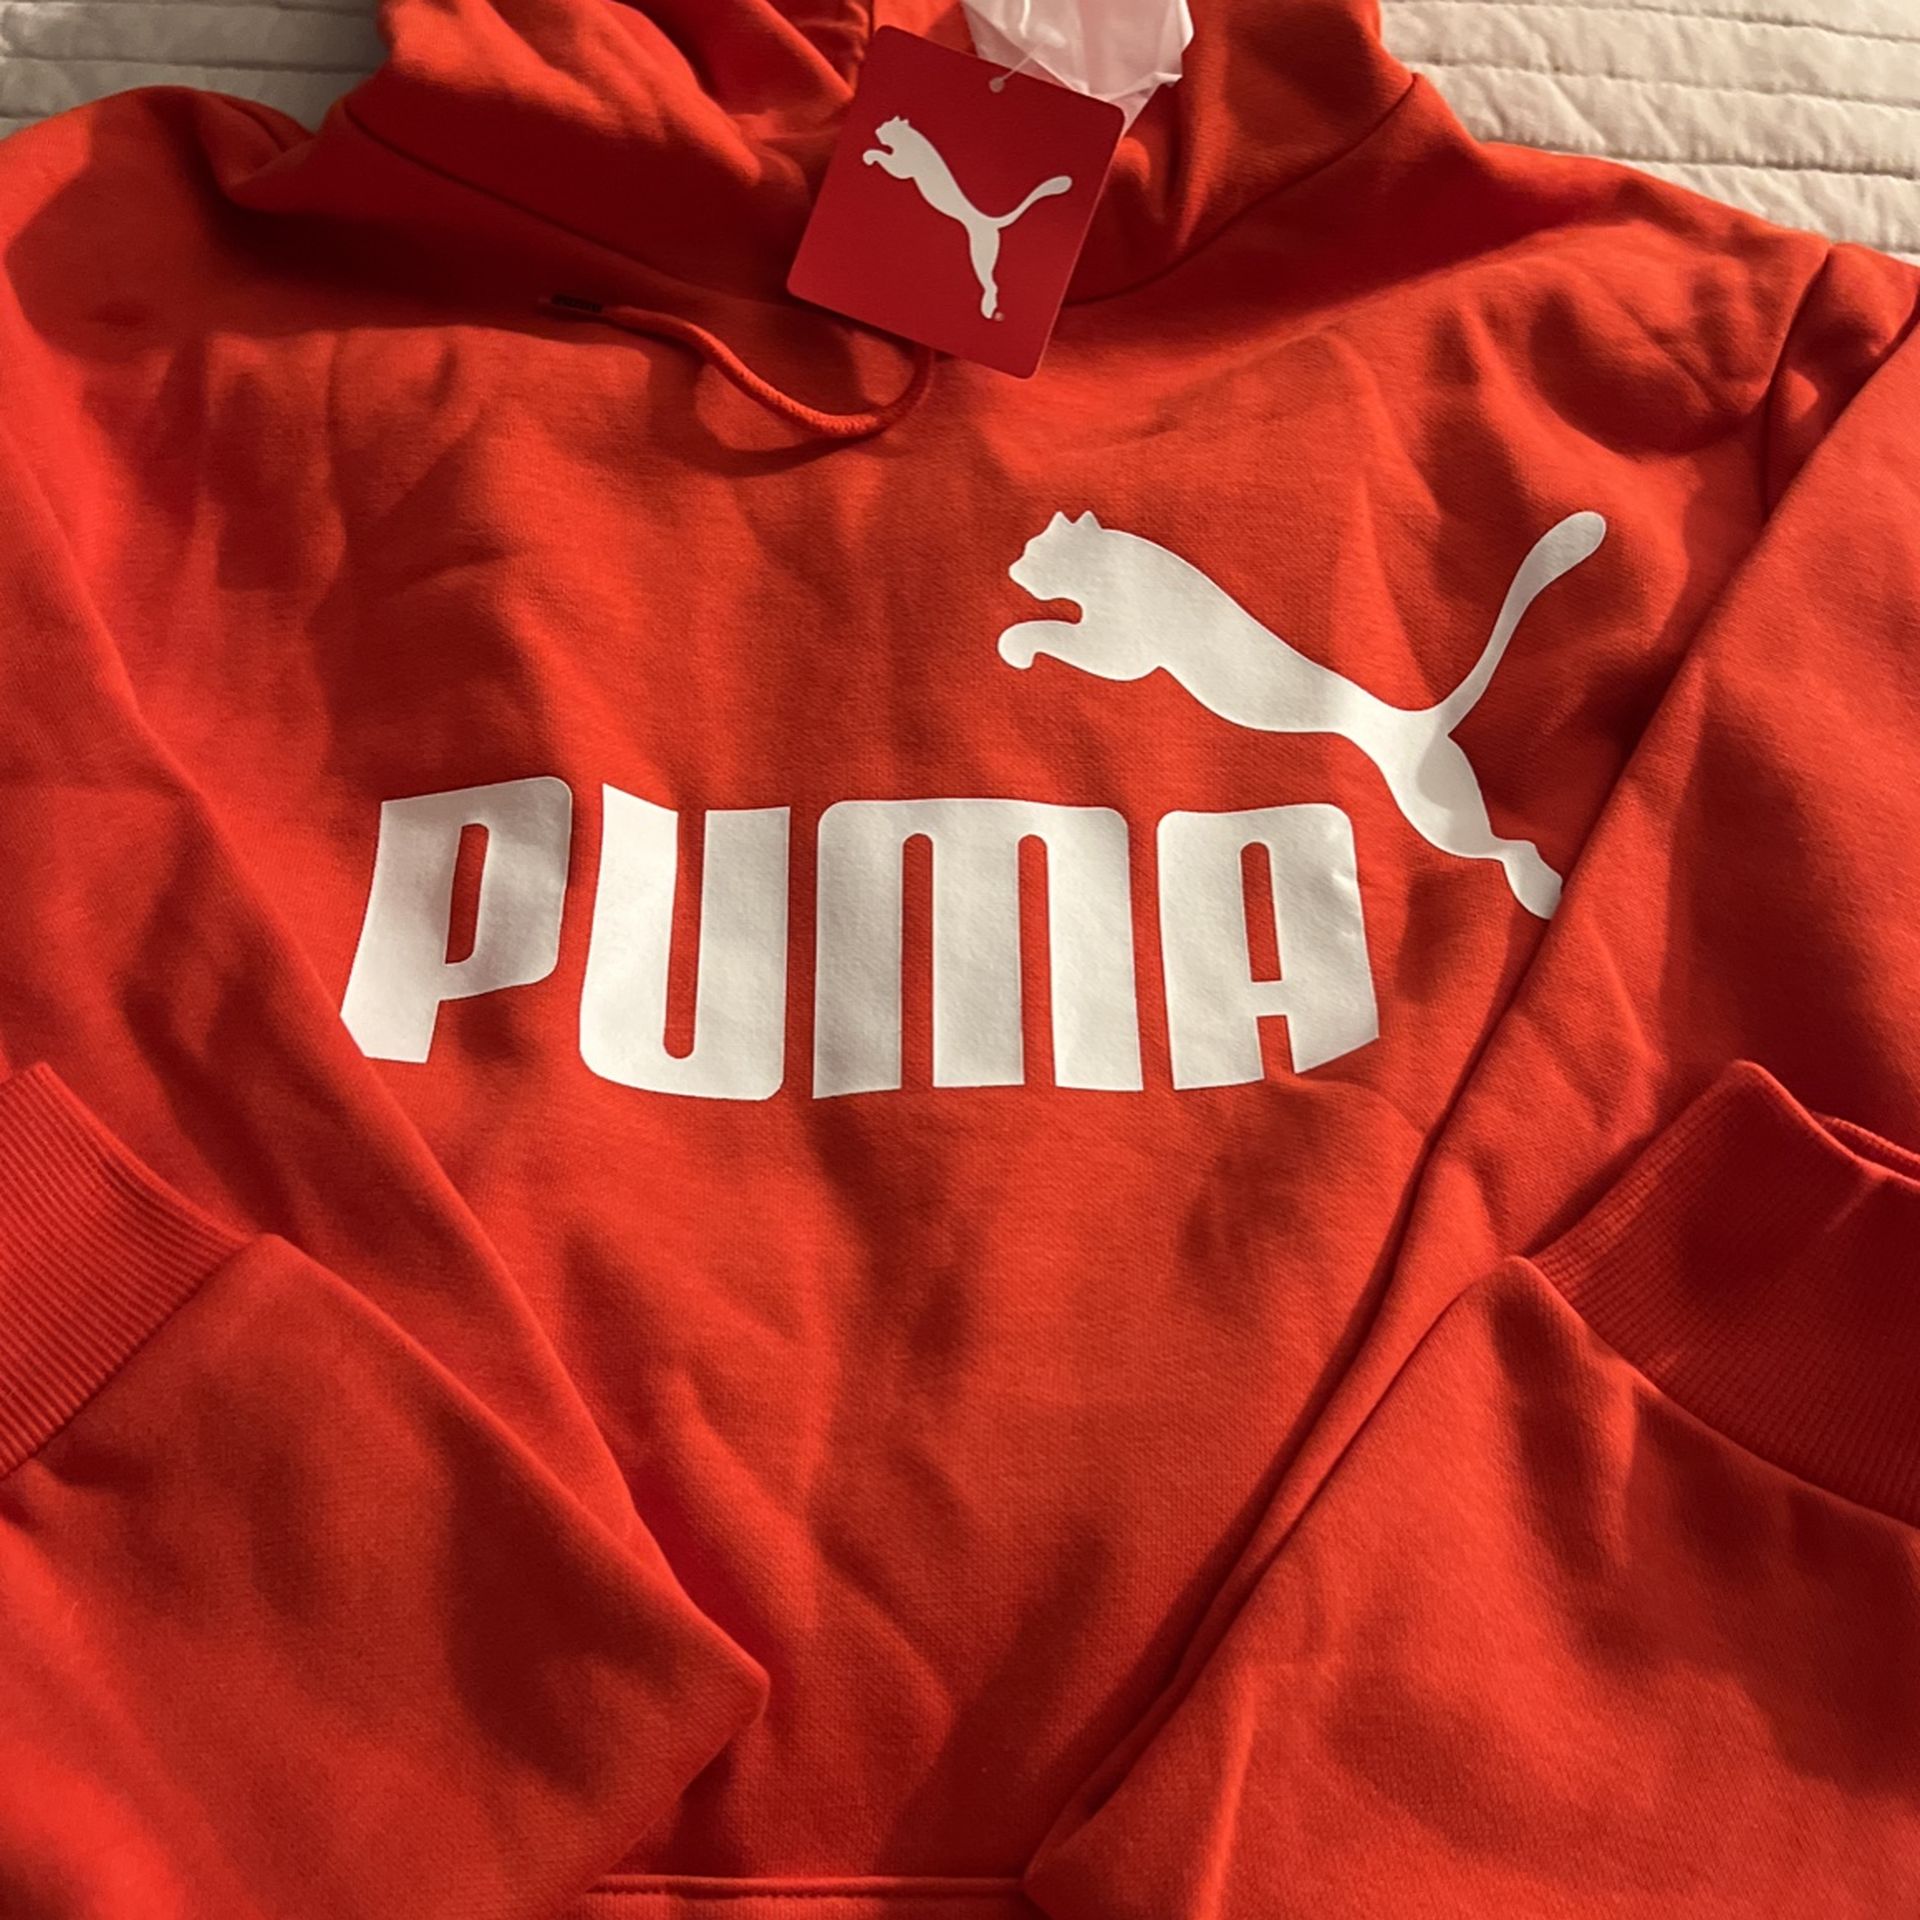 New Puma Hoodie Red/white 